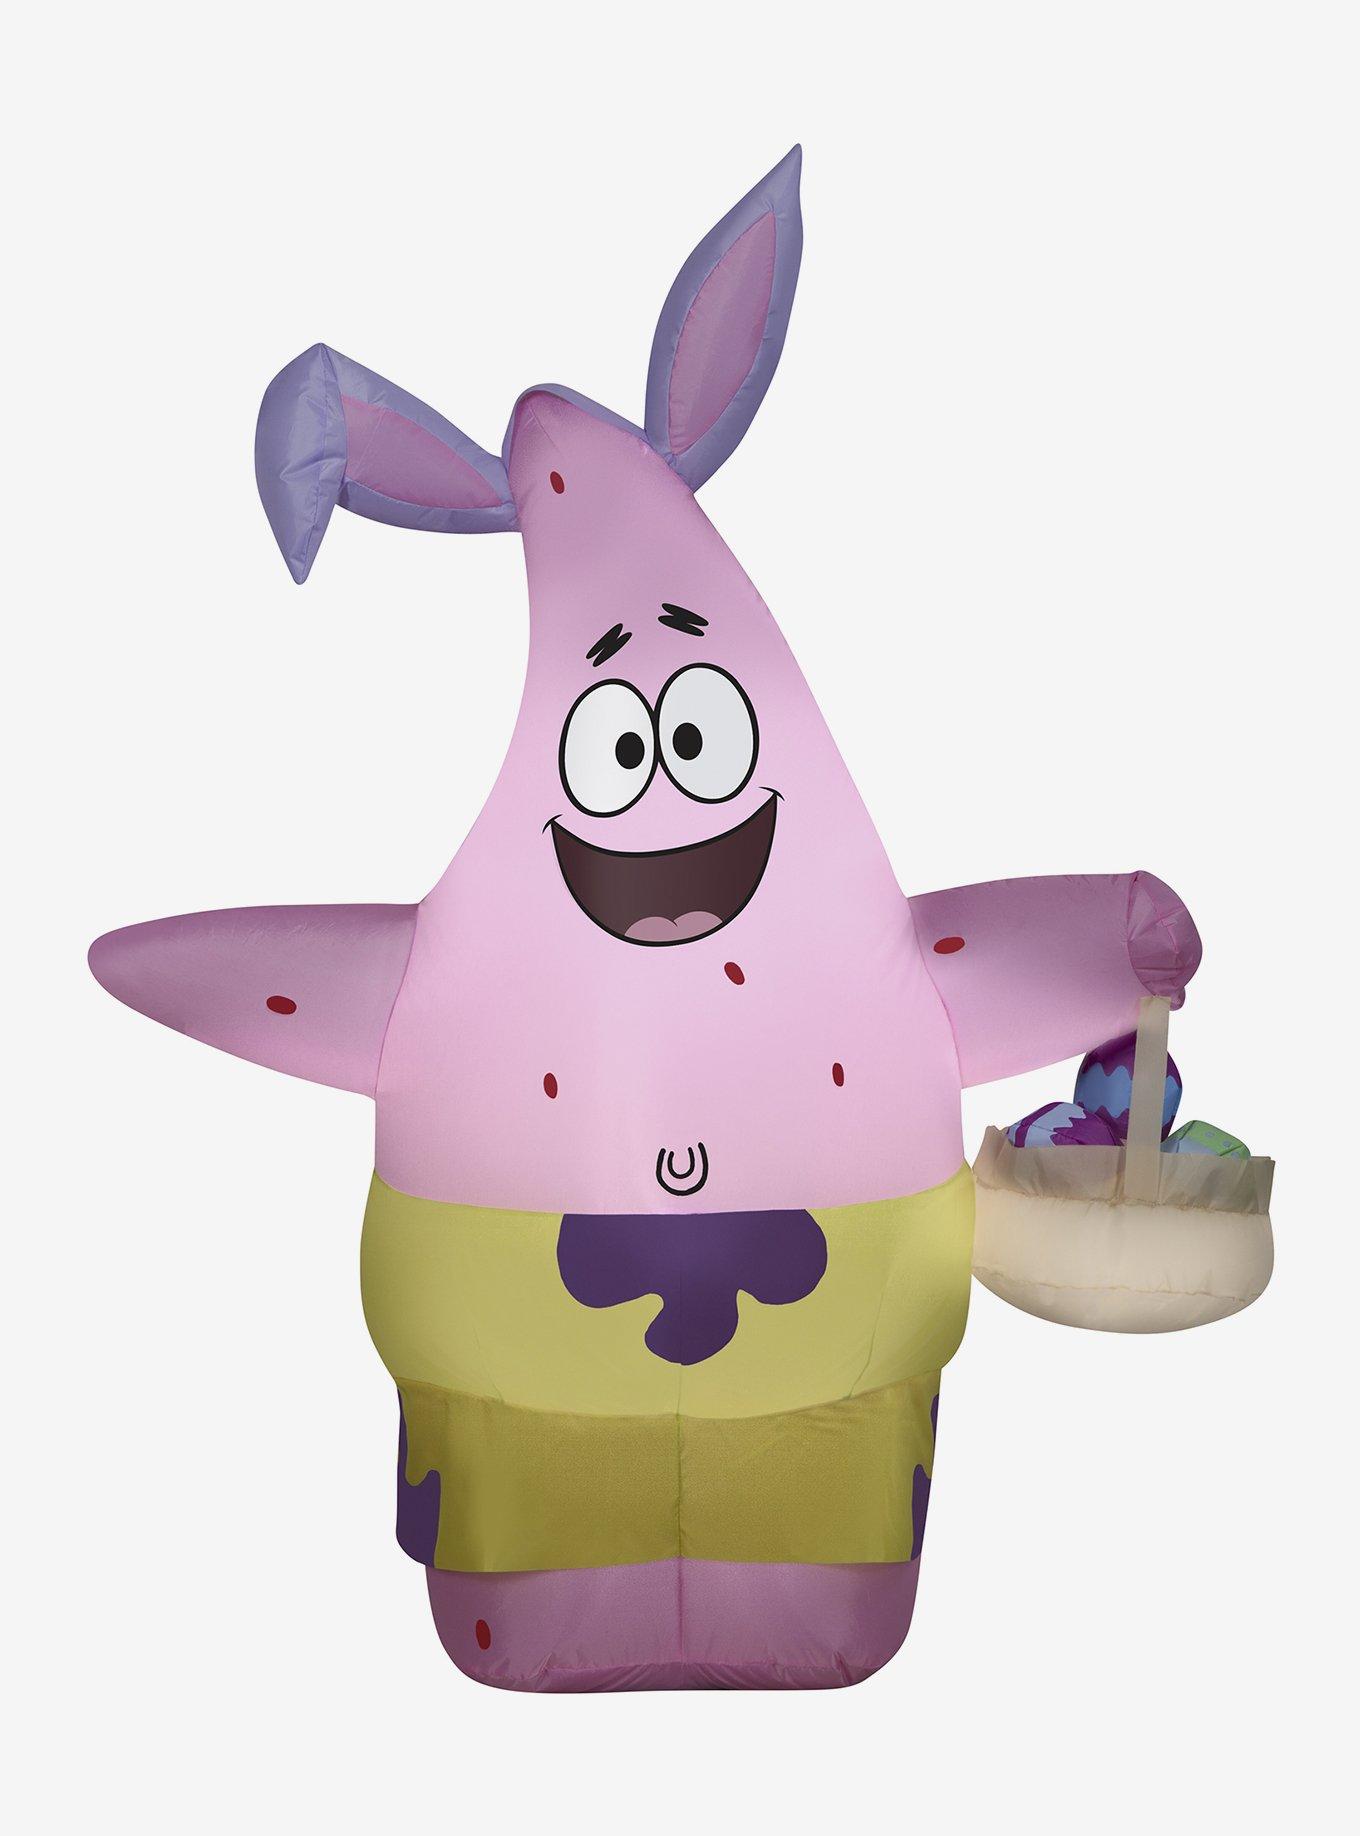 spongebob and patrick costumes